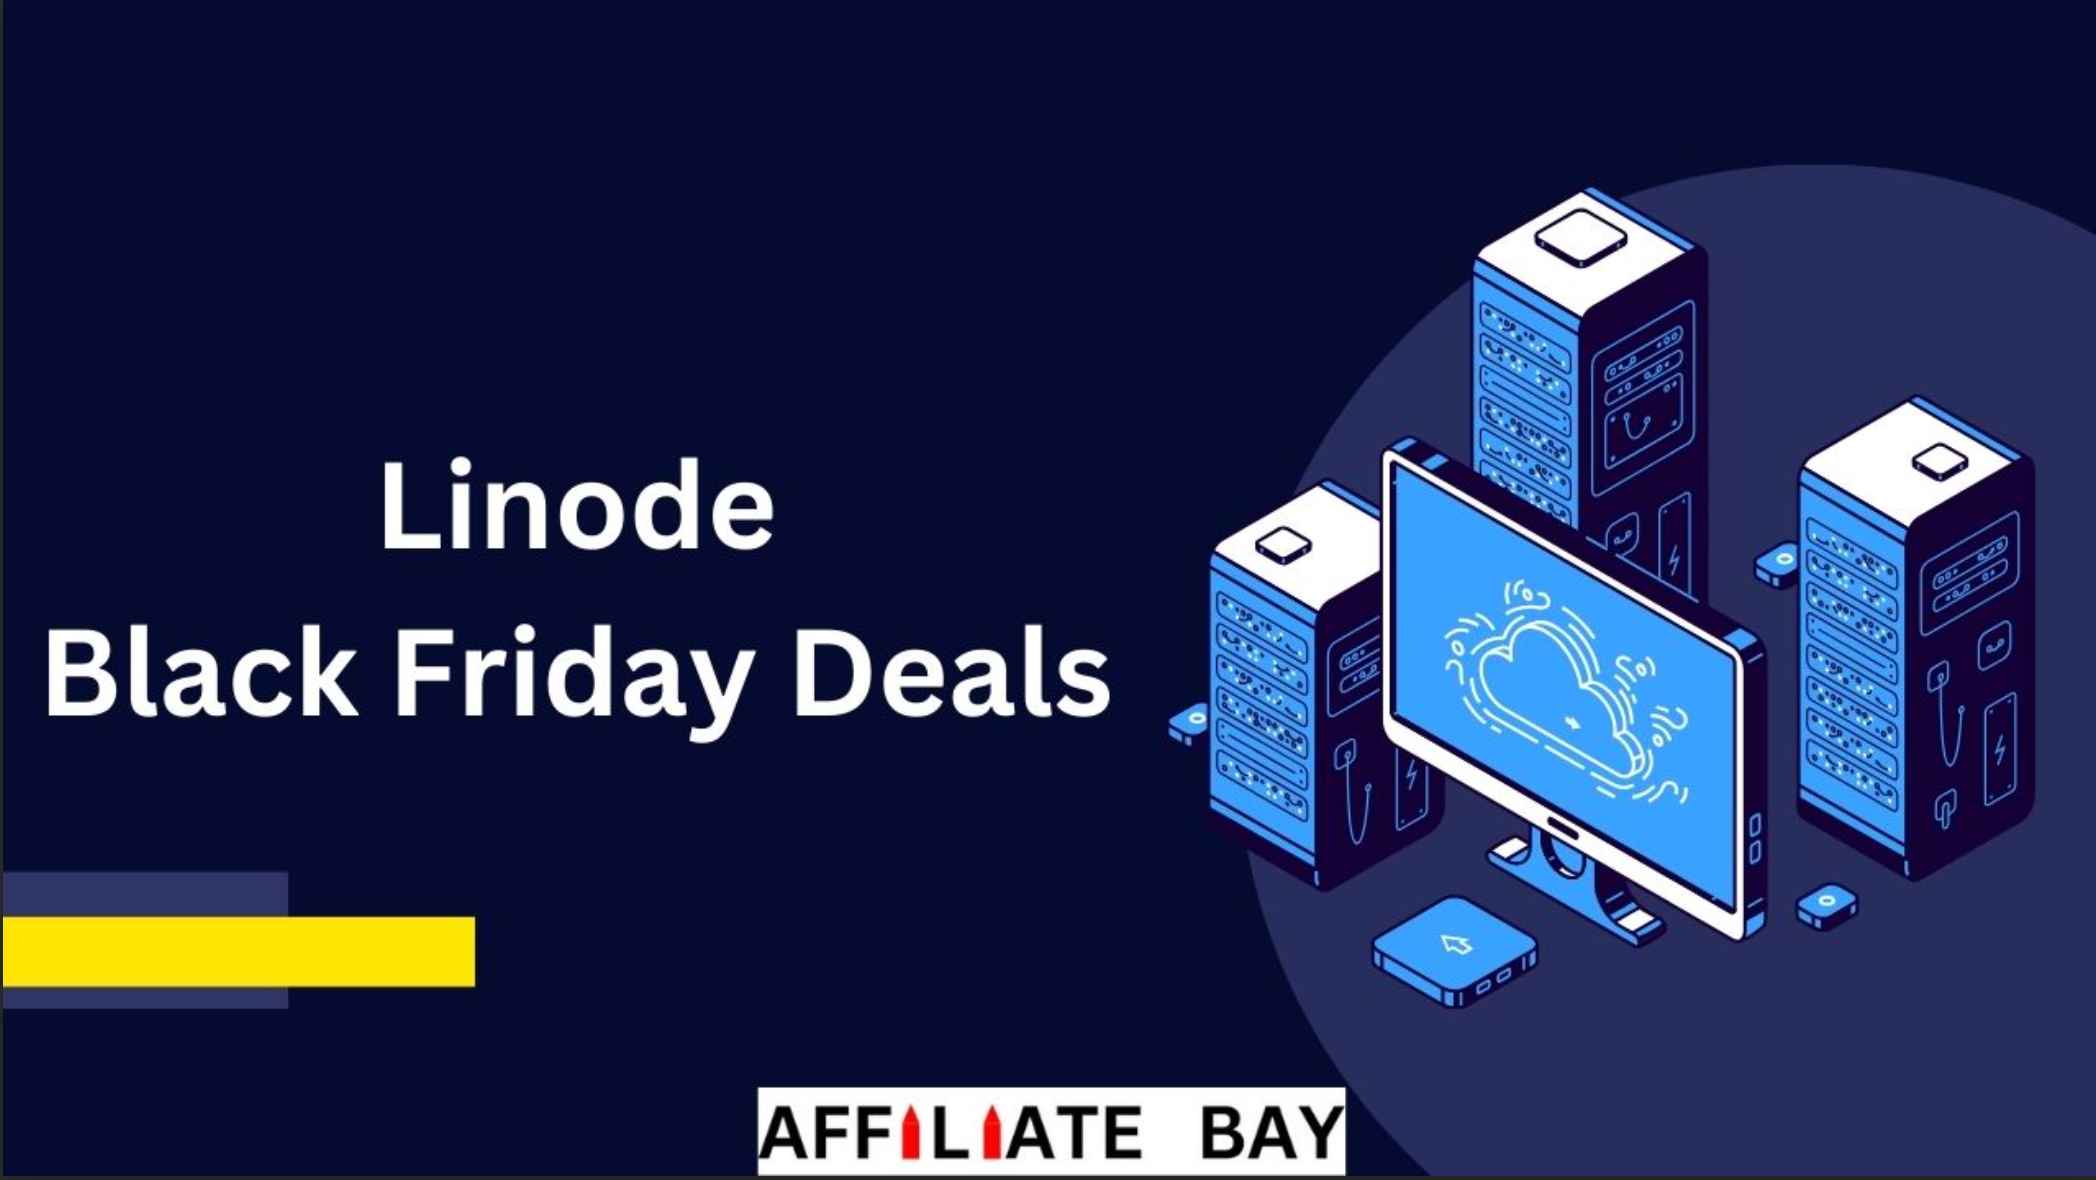 Linode Black Friday Deals